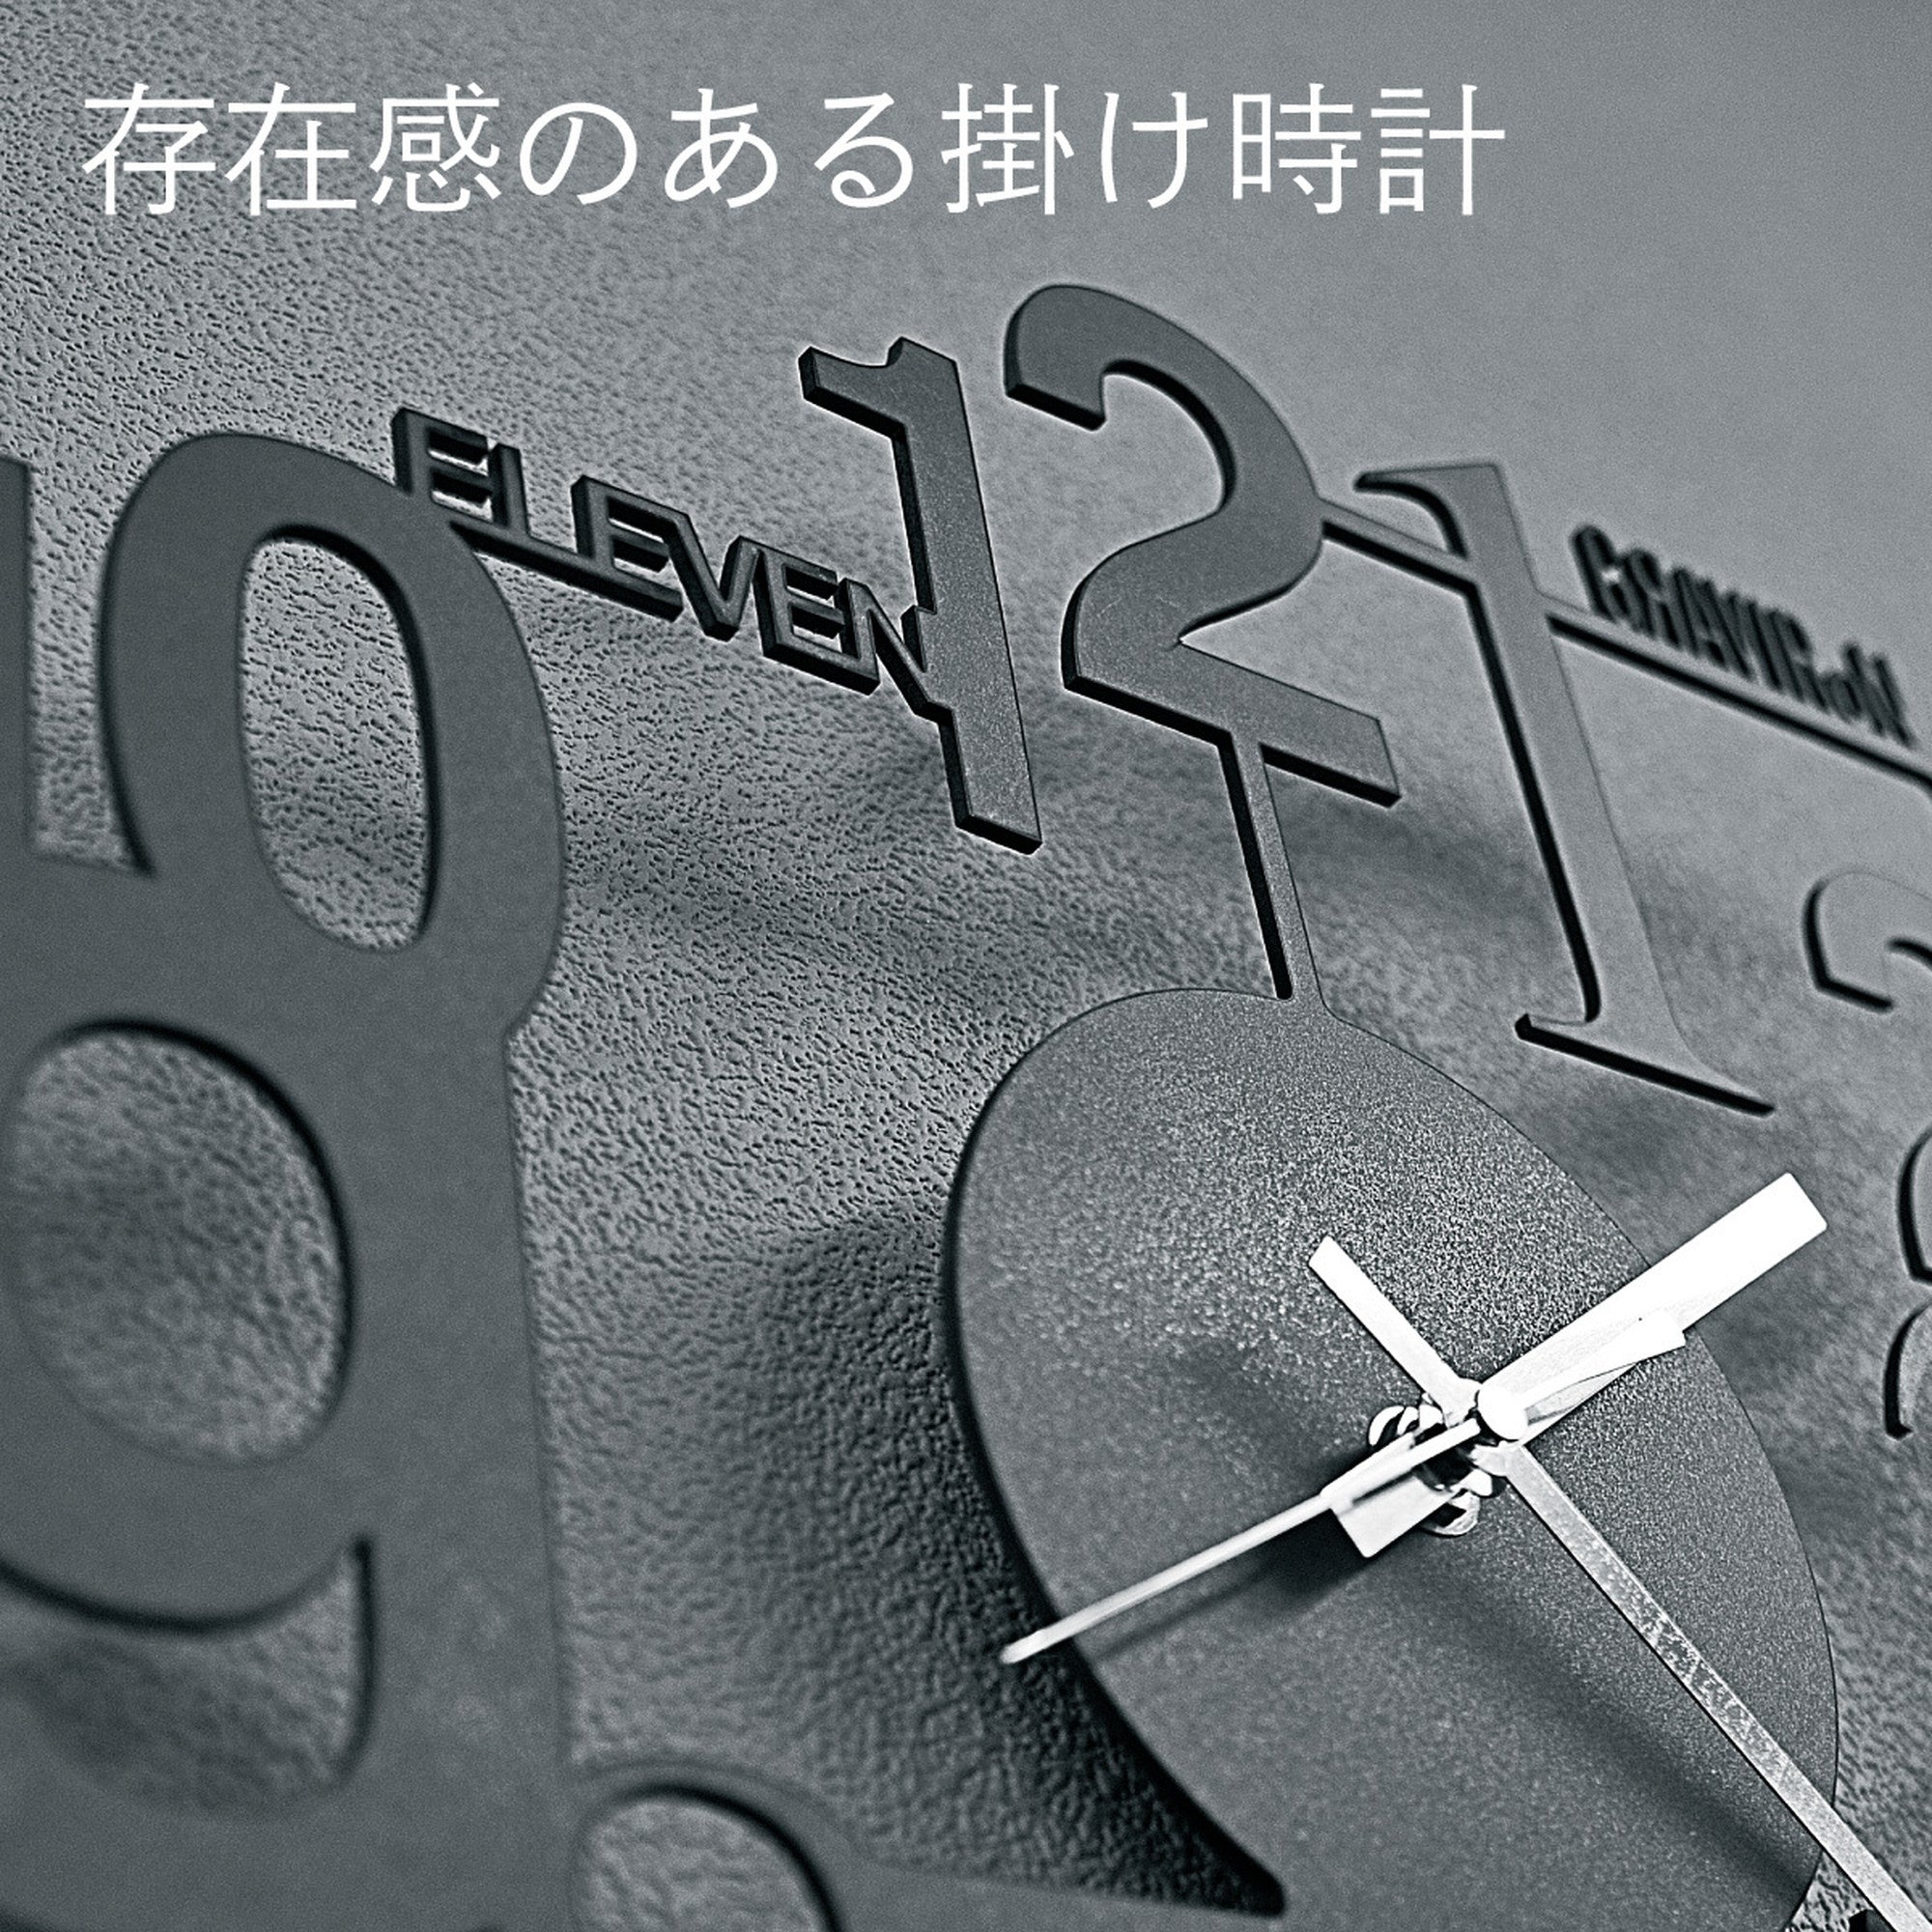 Anomaly Wall Clock 2020　酸洗鉄